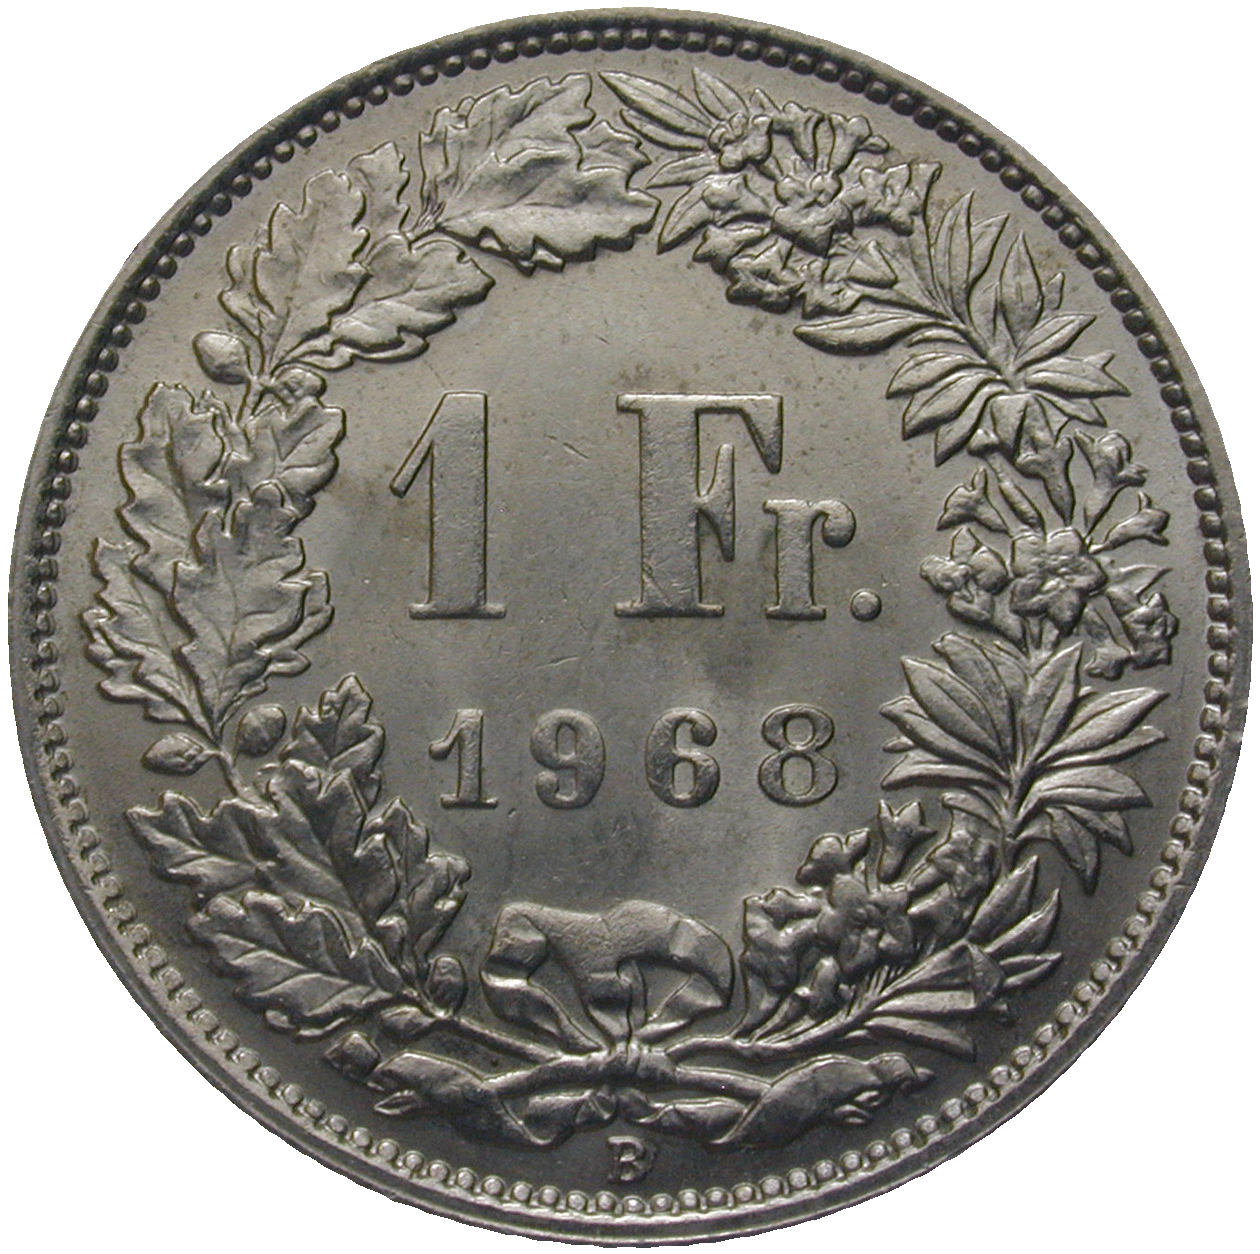 Schweizerische Eidgenossenschaft, 1 Franken 1968 (reverse)